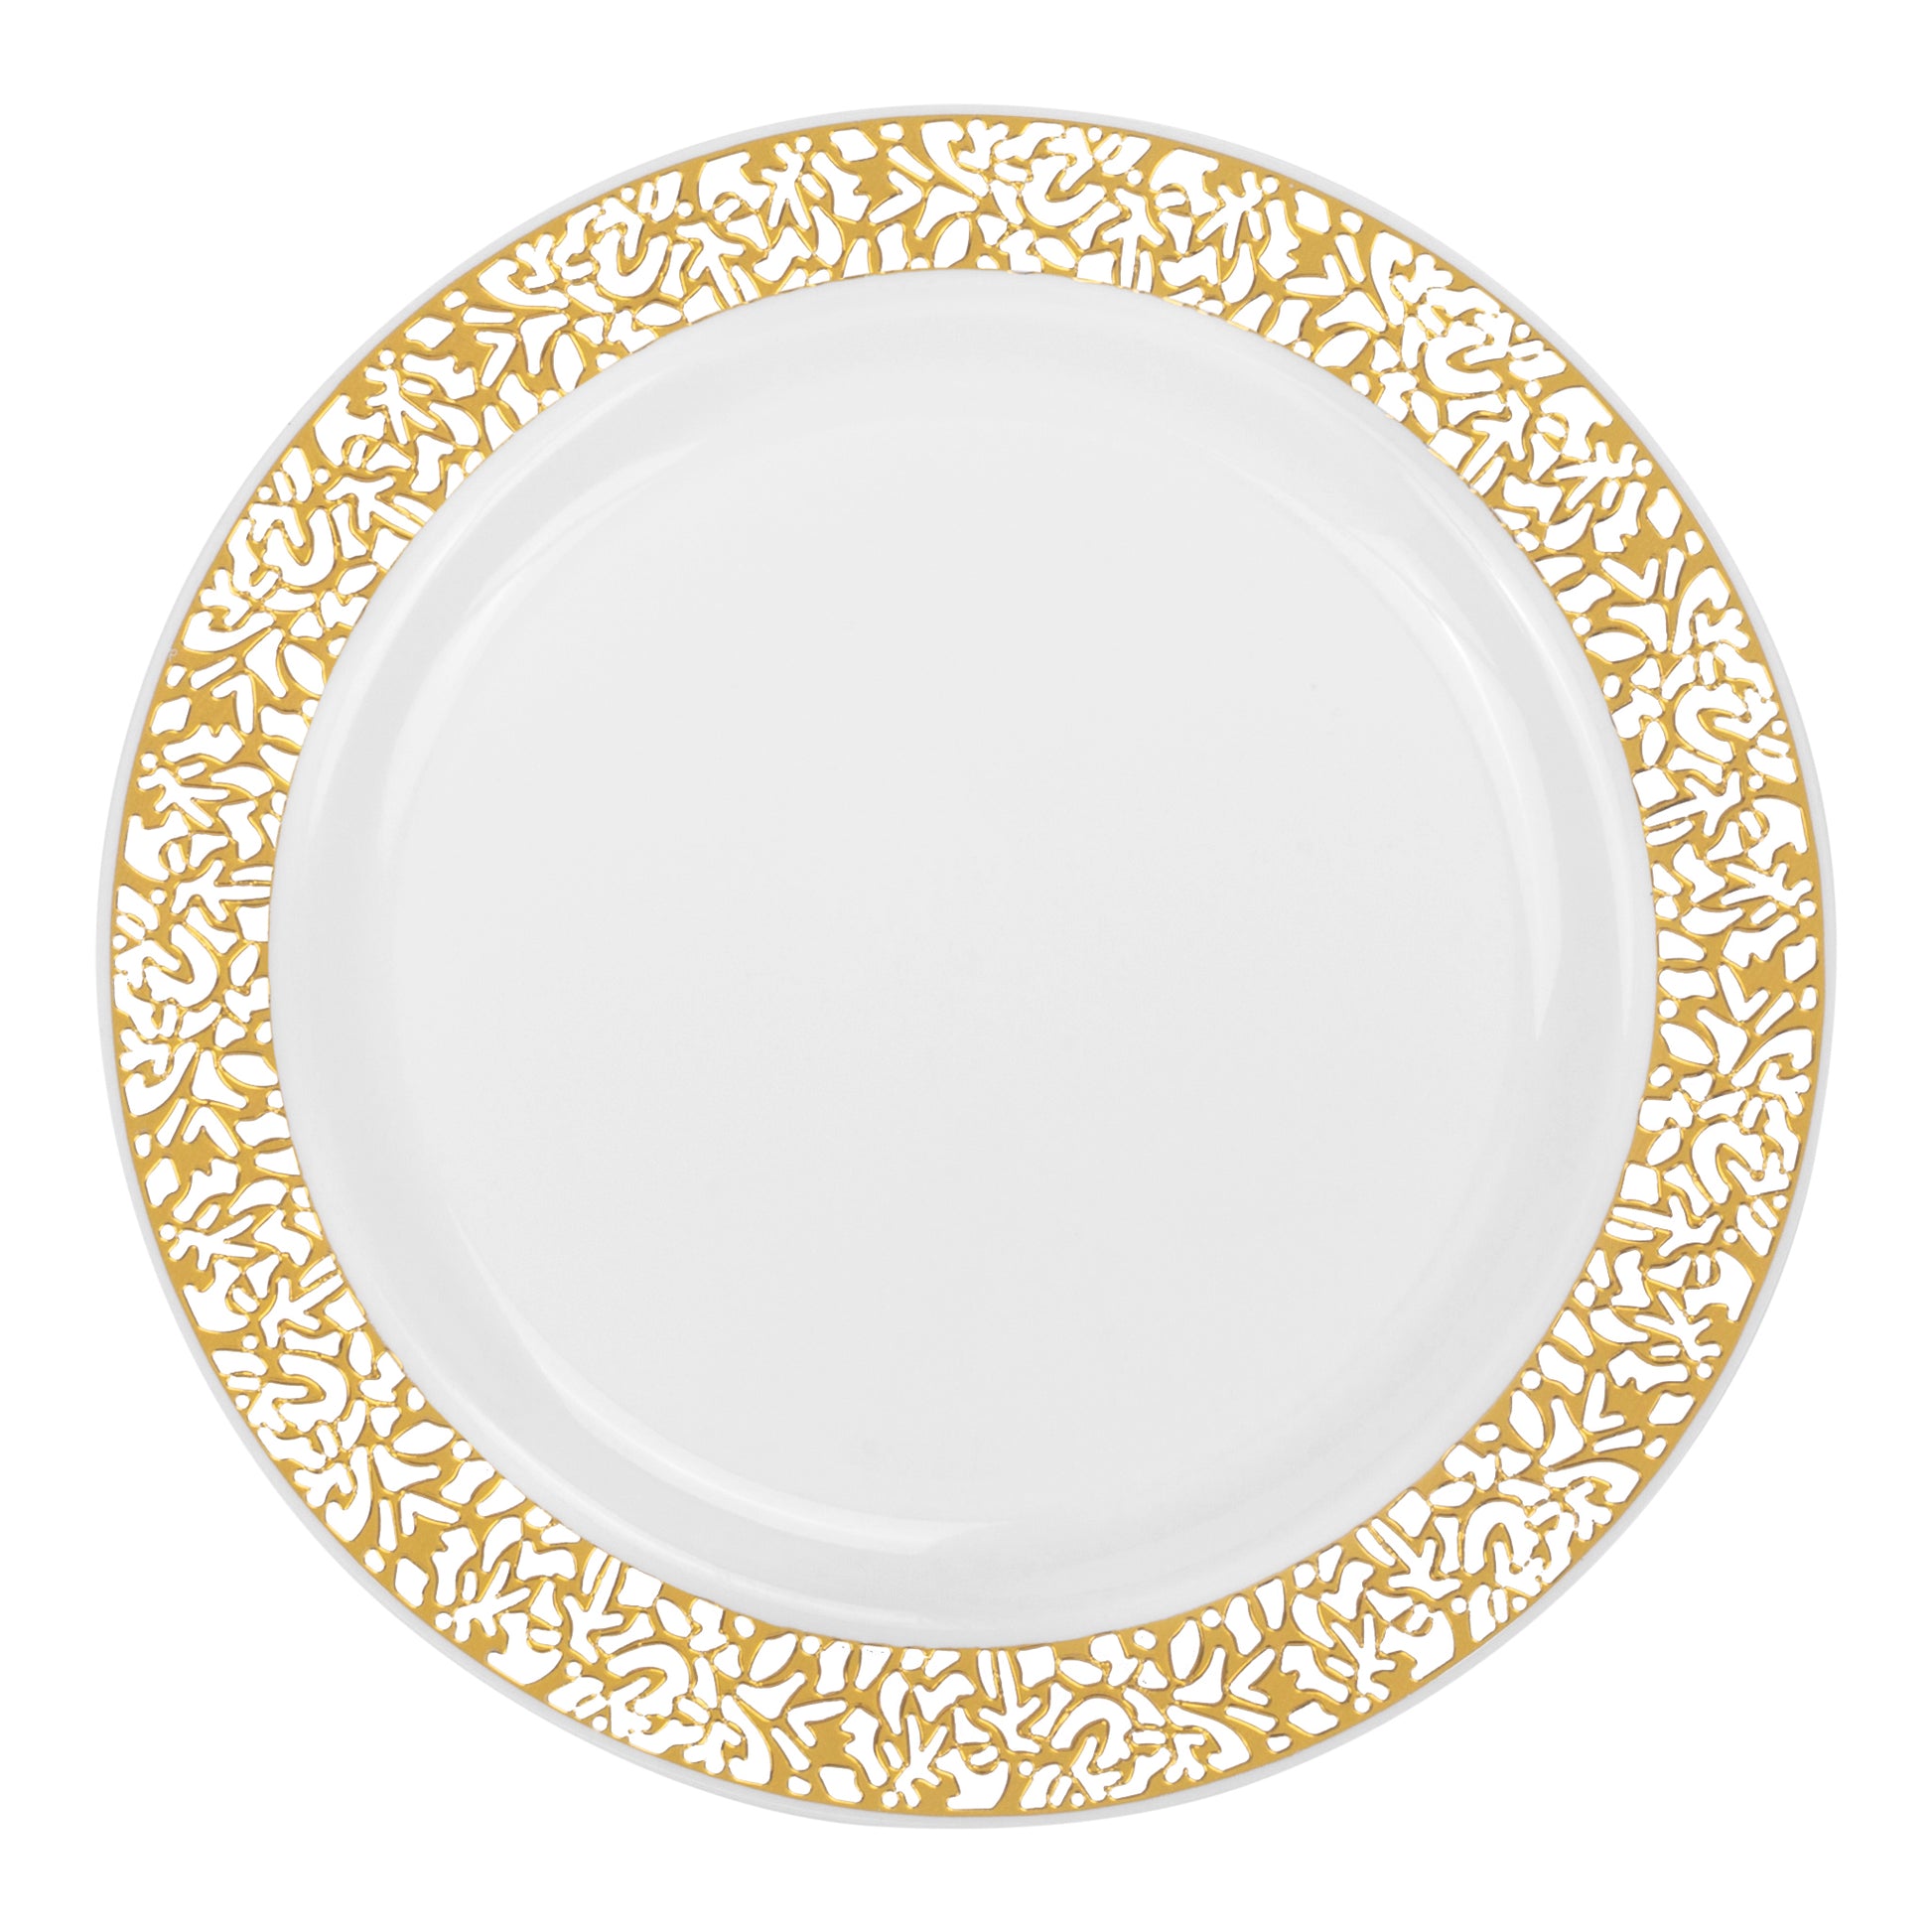 Lace Disposable Plastic Plates 40 pcs Combo Pack - White Gold-Trimmed